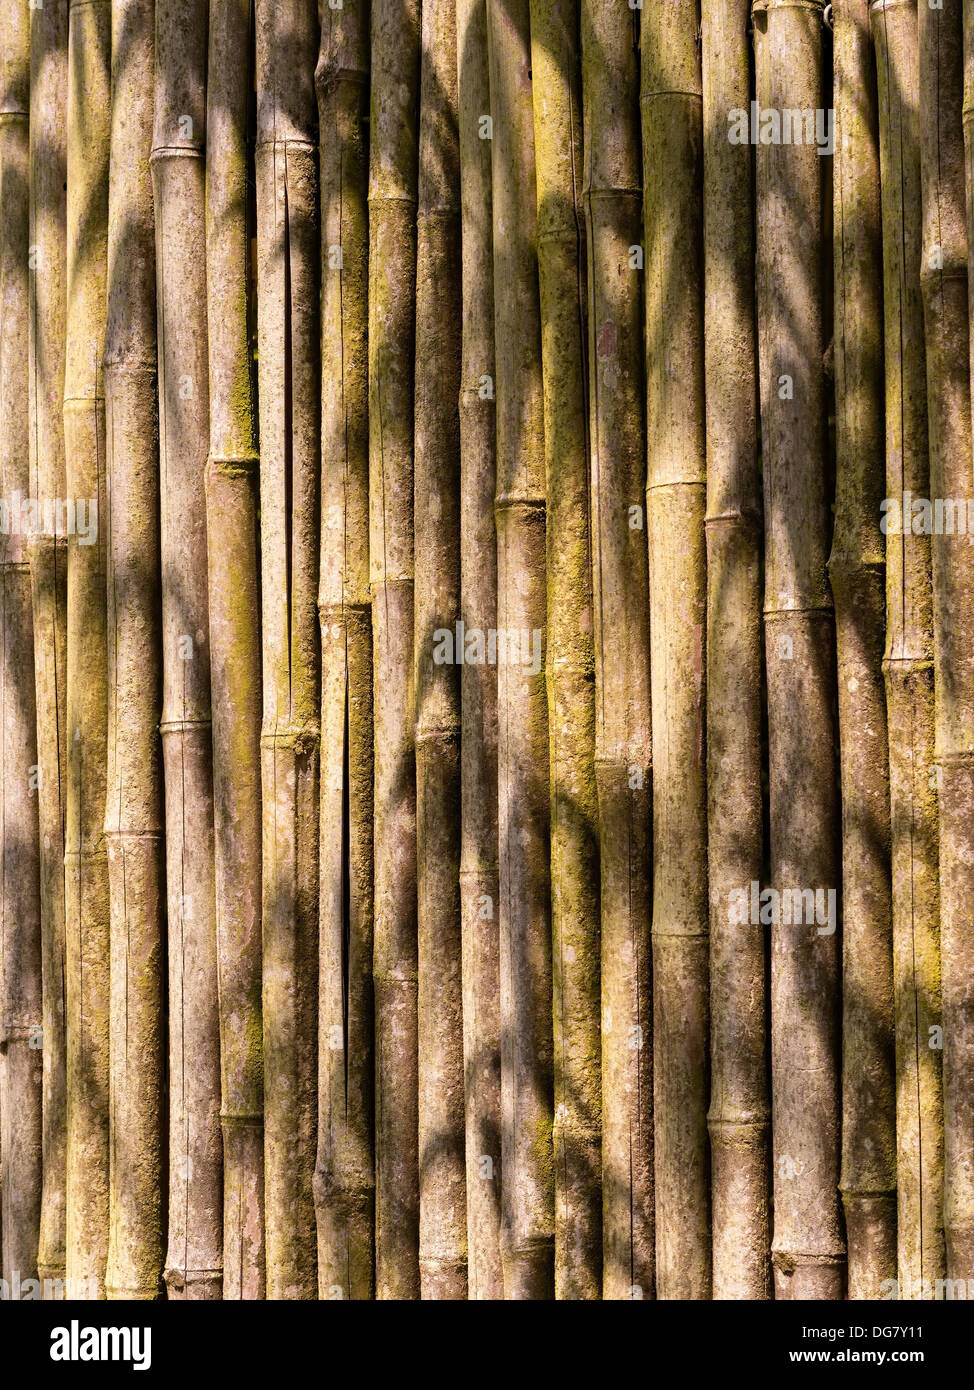 Sunlit bamboo garden fence screen Stock Photo